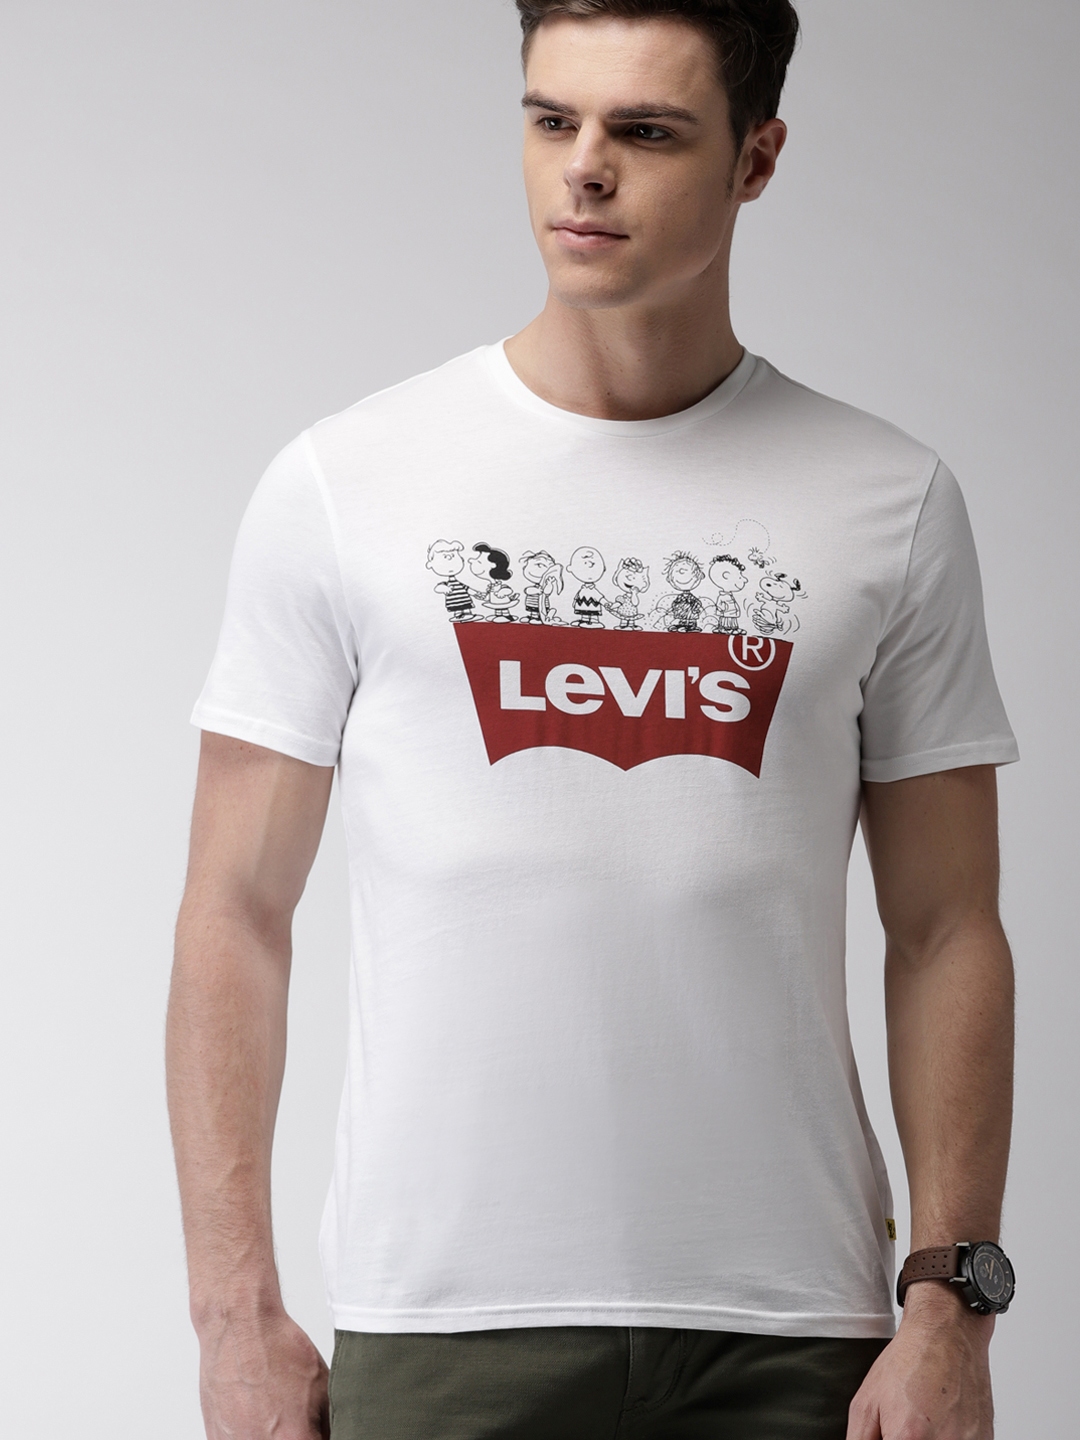 levis mens white t shirt